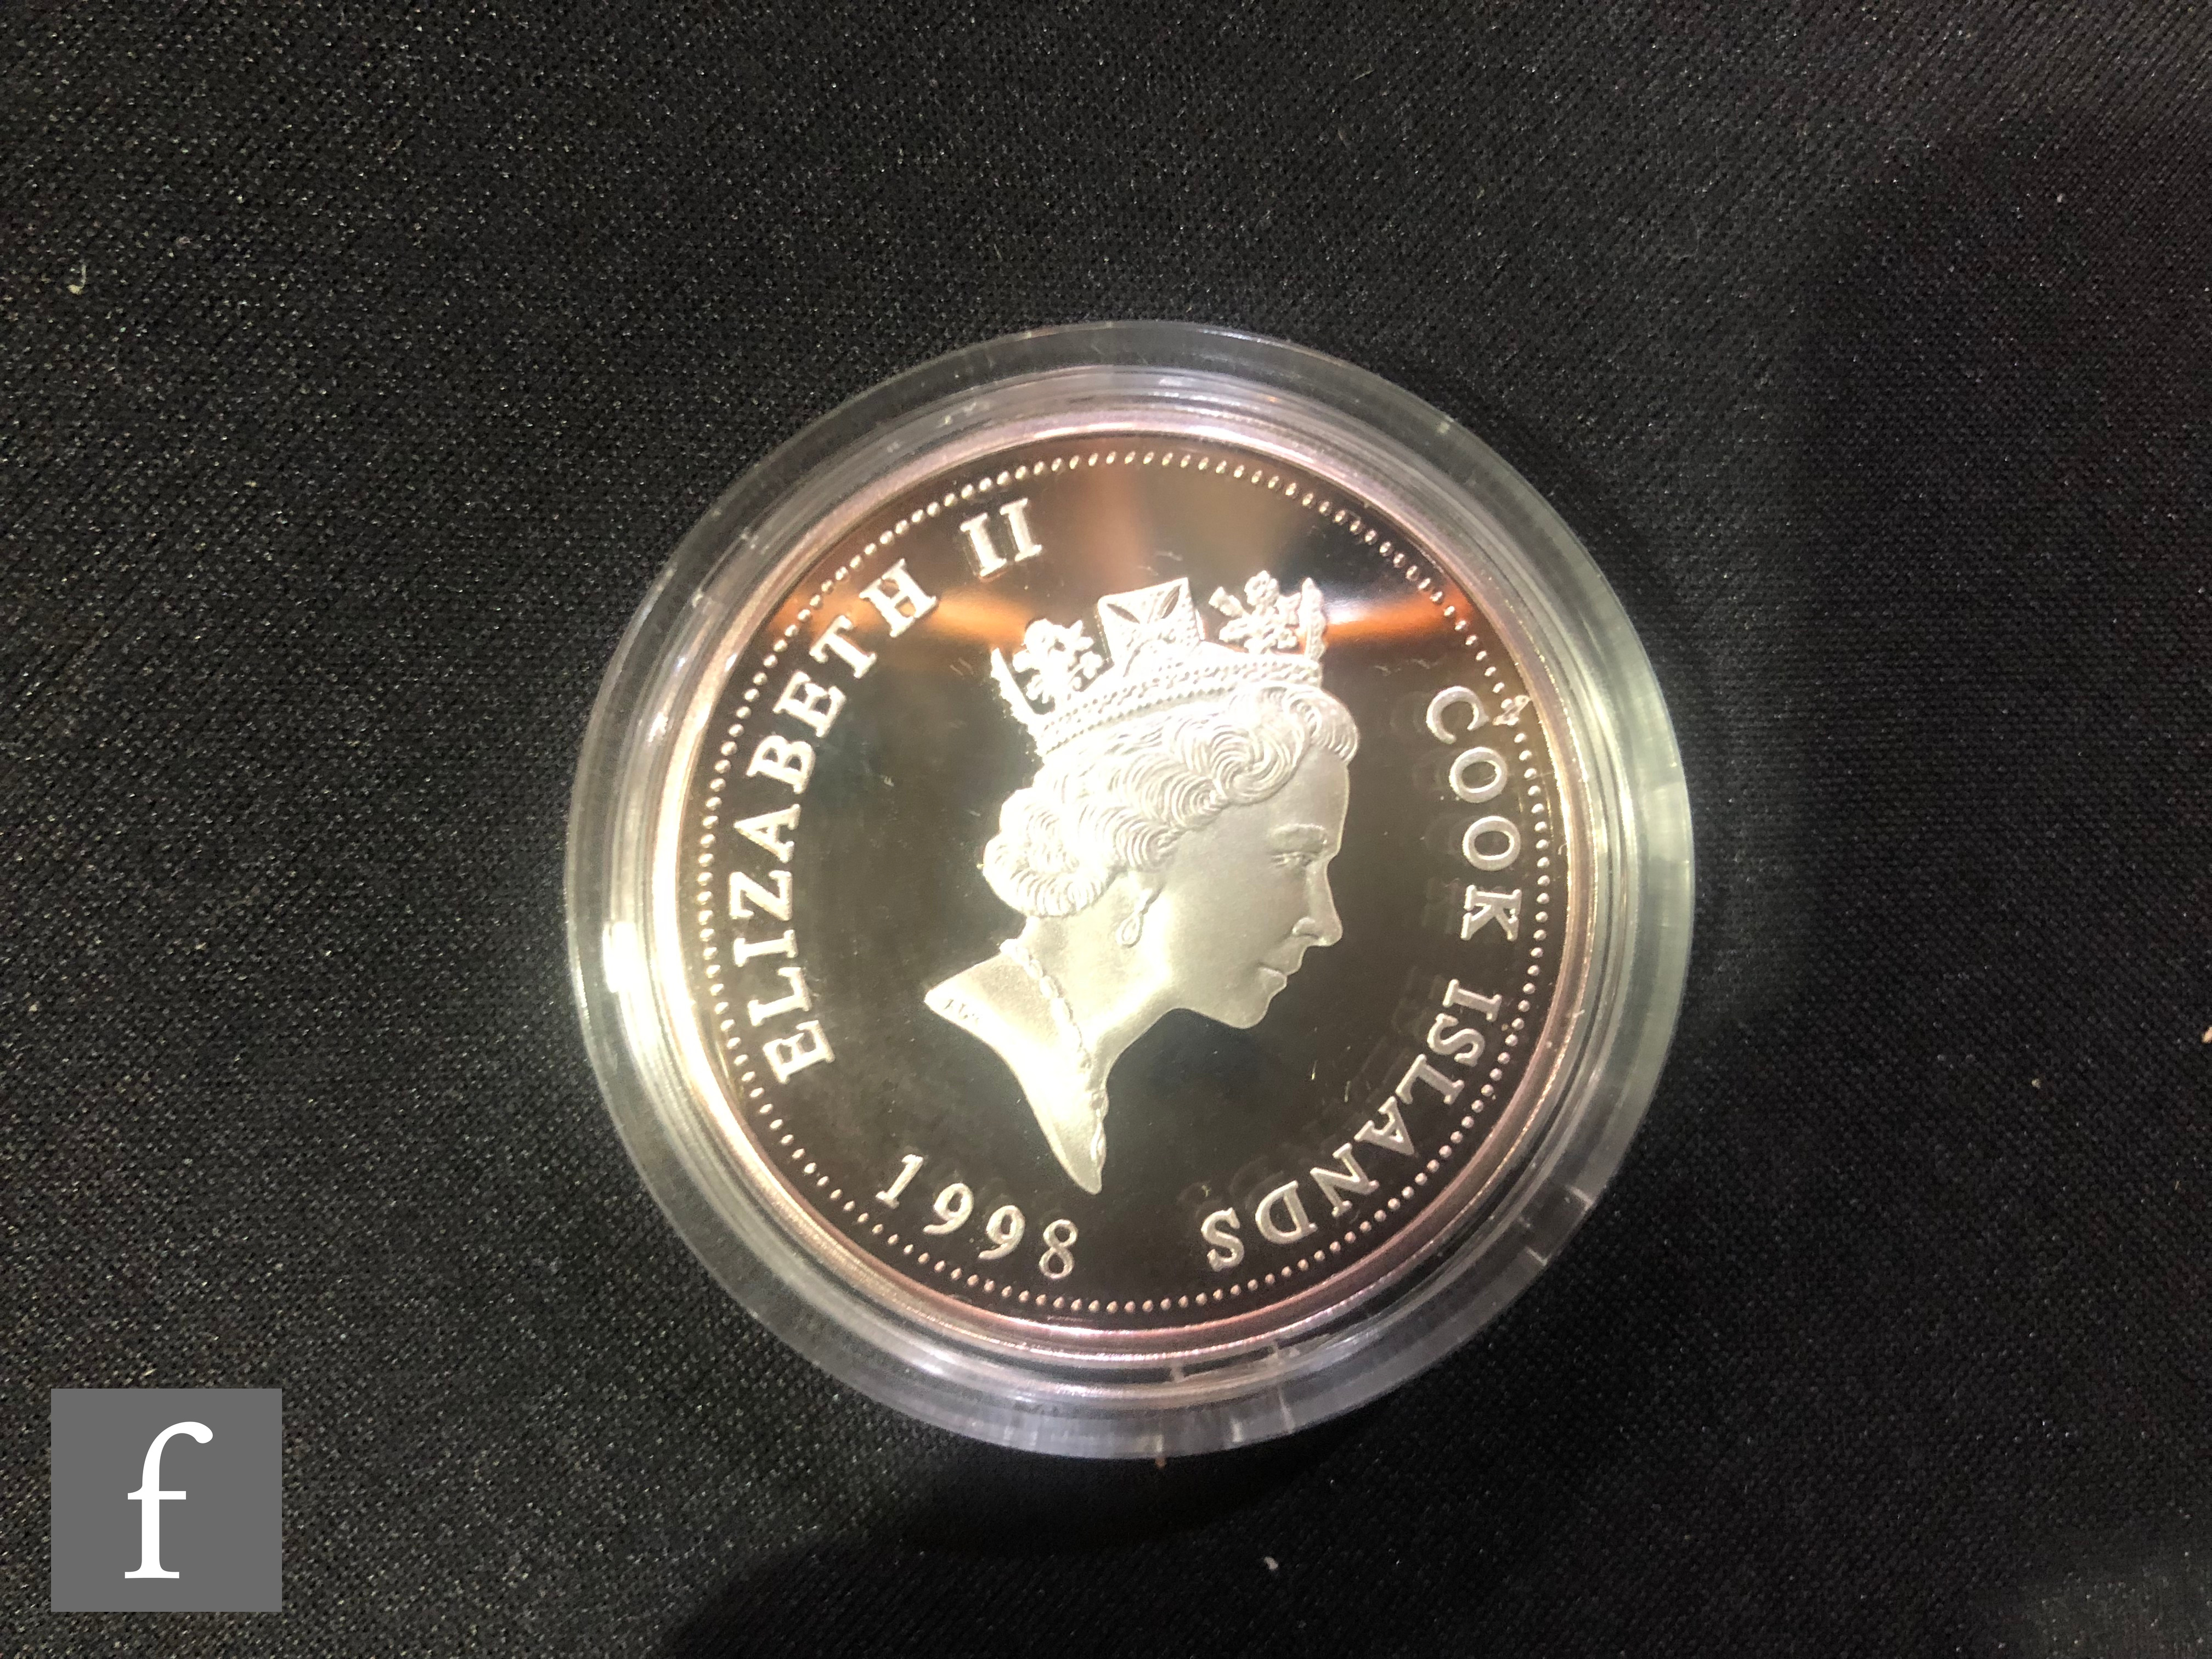 An Elizabeth II 2014 Britannia silver proof coin cased, Australia one dollar silver Platypus, - Image 7 of 13